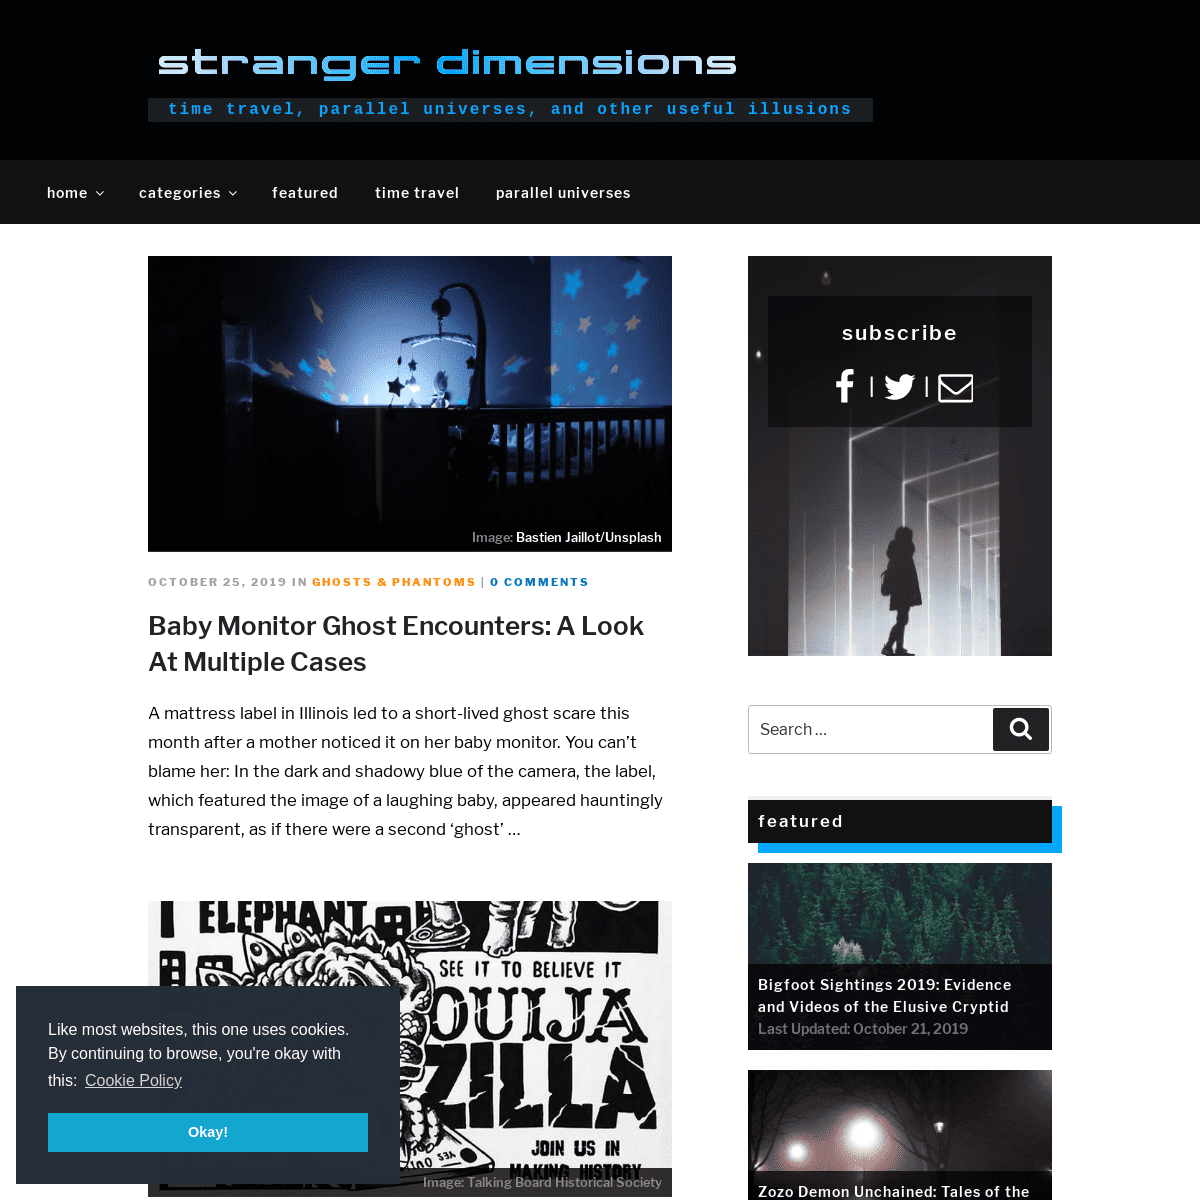 A complete backup of strangerdimensions.com